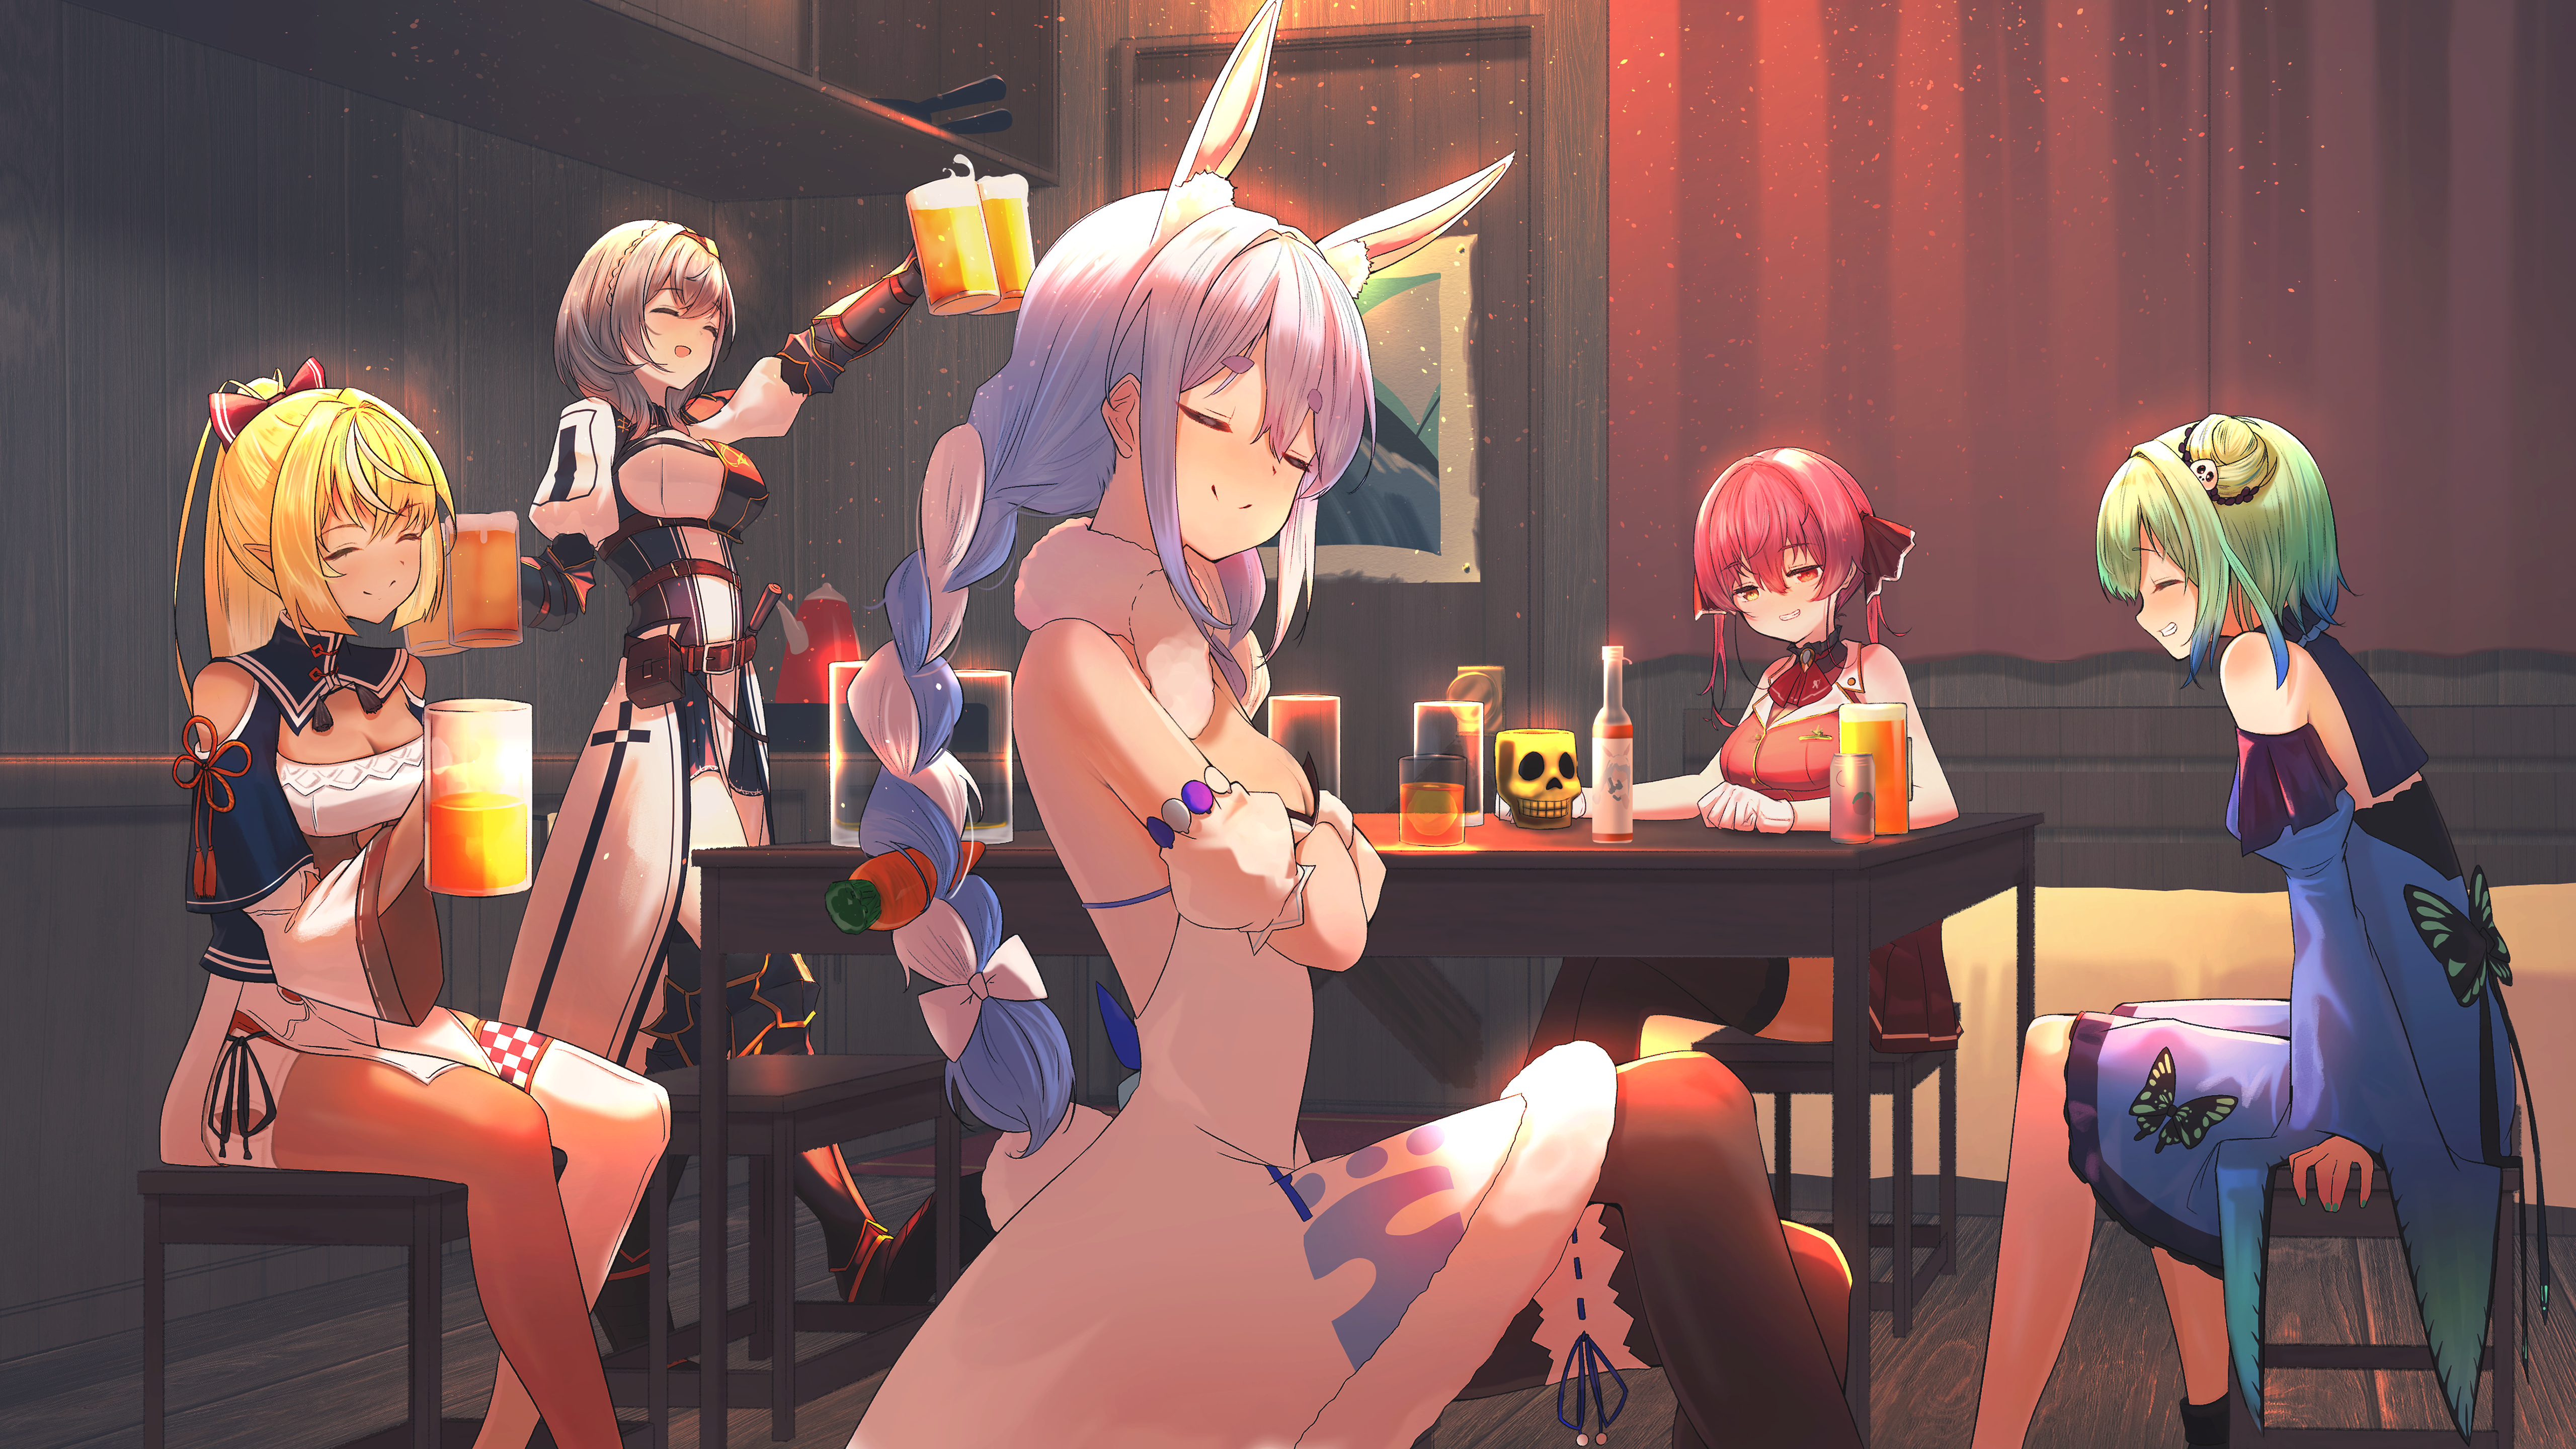 Anime Girls Heterochromia Drunk Tavern Beer  Gaming Mat Desk 43662 - Picture 1 of 1